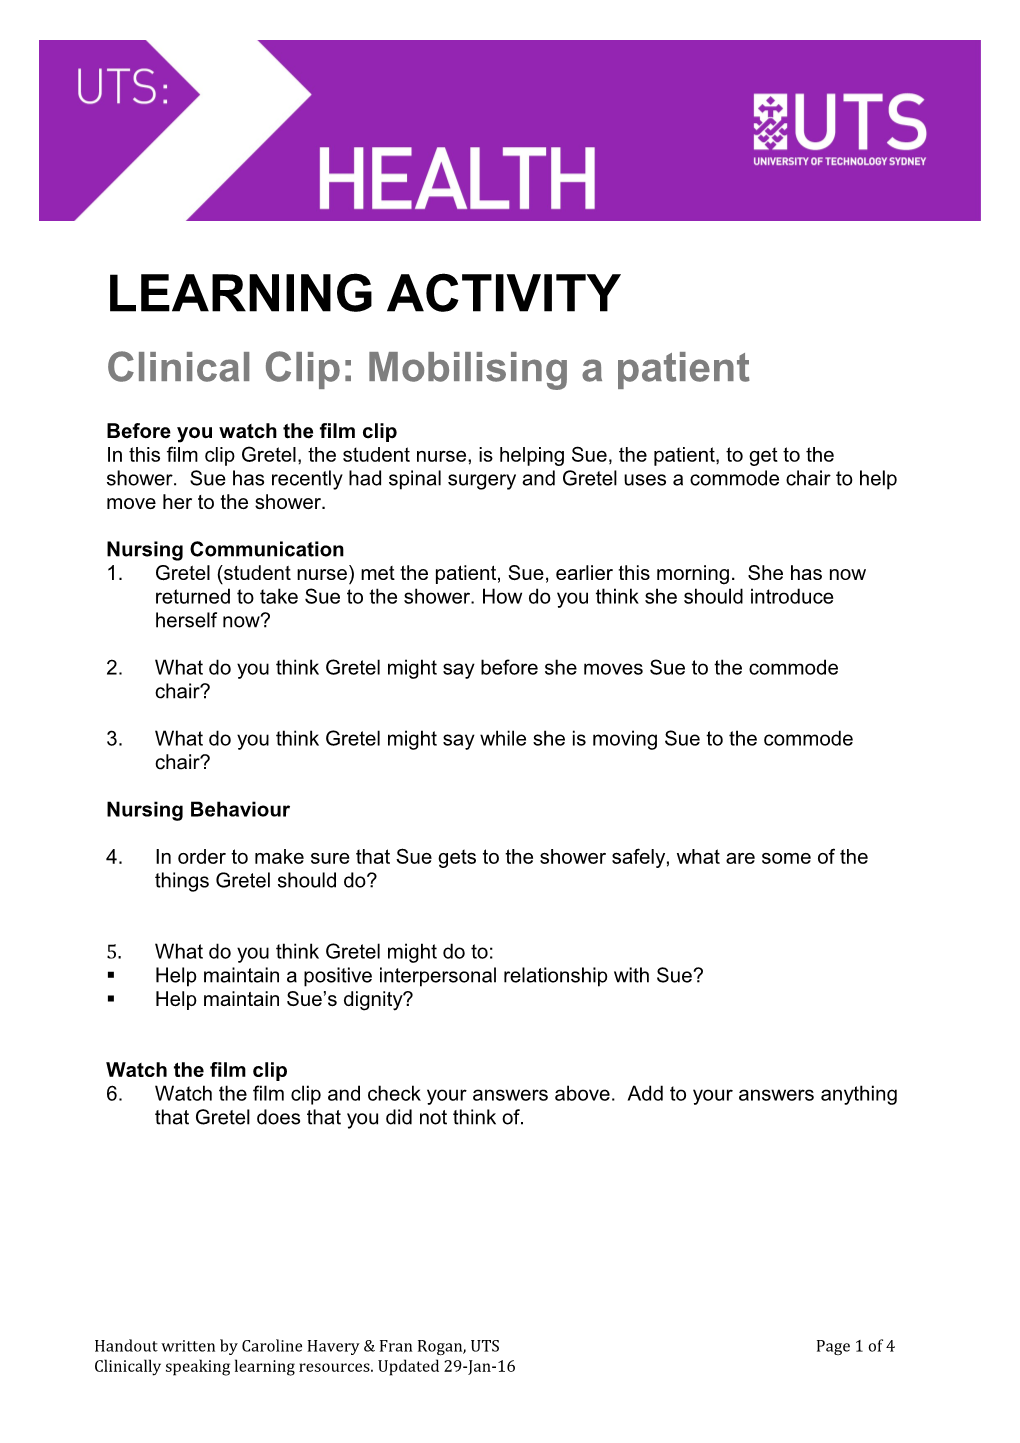 Clinical Clip: Mobilising a Patient